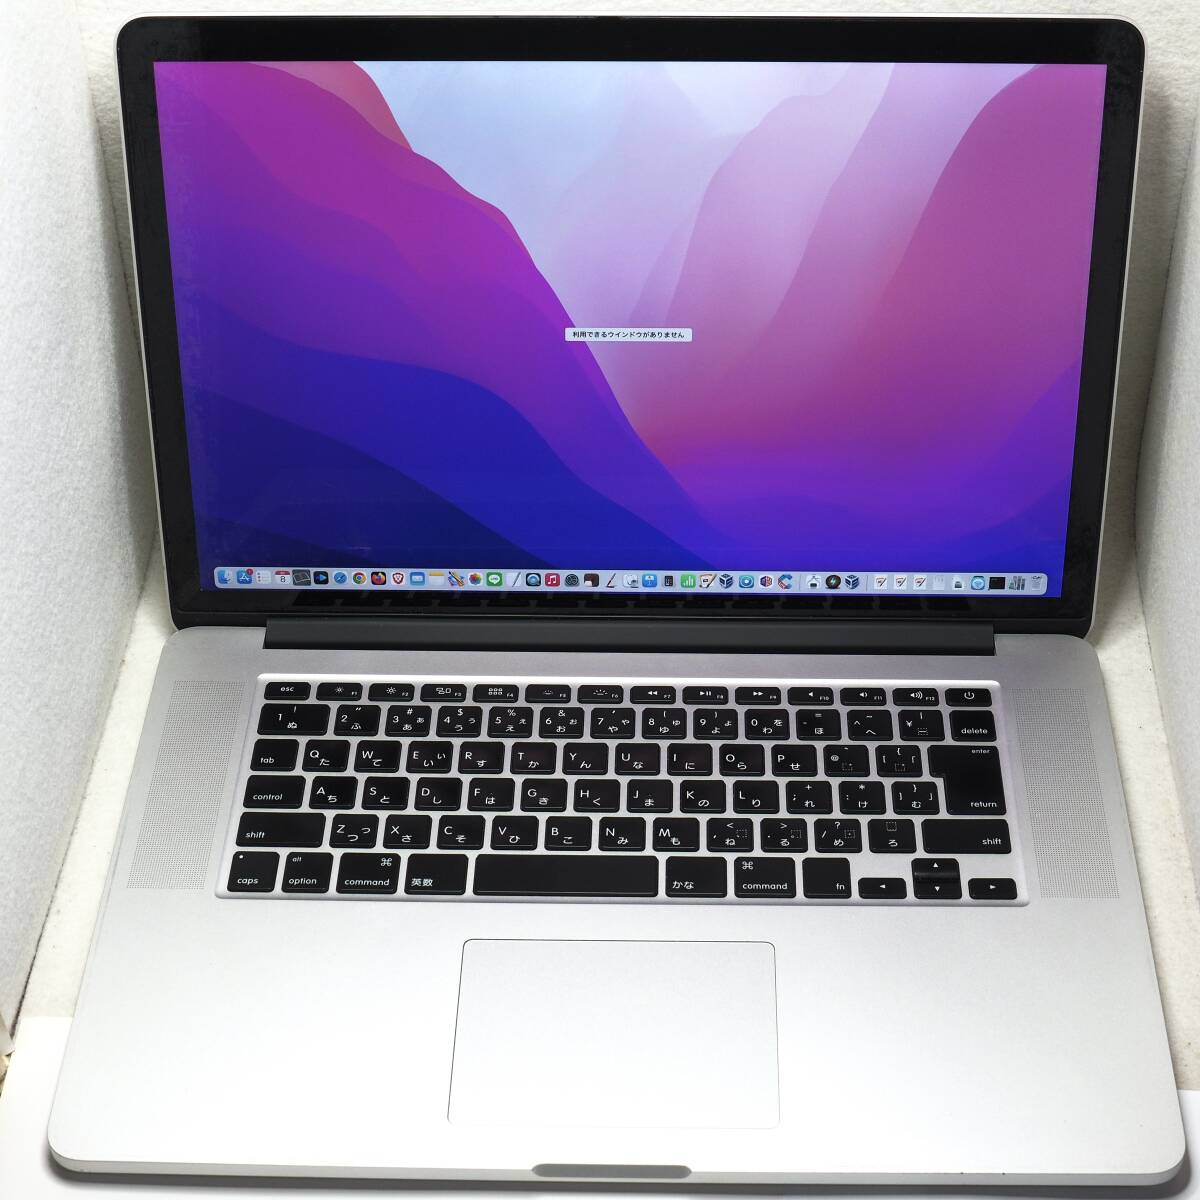 Apple Macbook Pro Late 2013 Retina 15インチ A1398 上位モデル クアッドコア 2.6GHz Corei7 16GB/500GB SSD付 動作OKの画像2